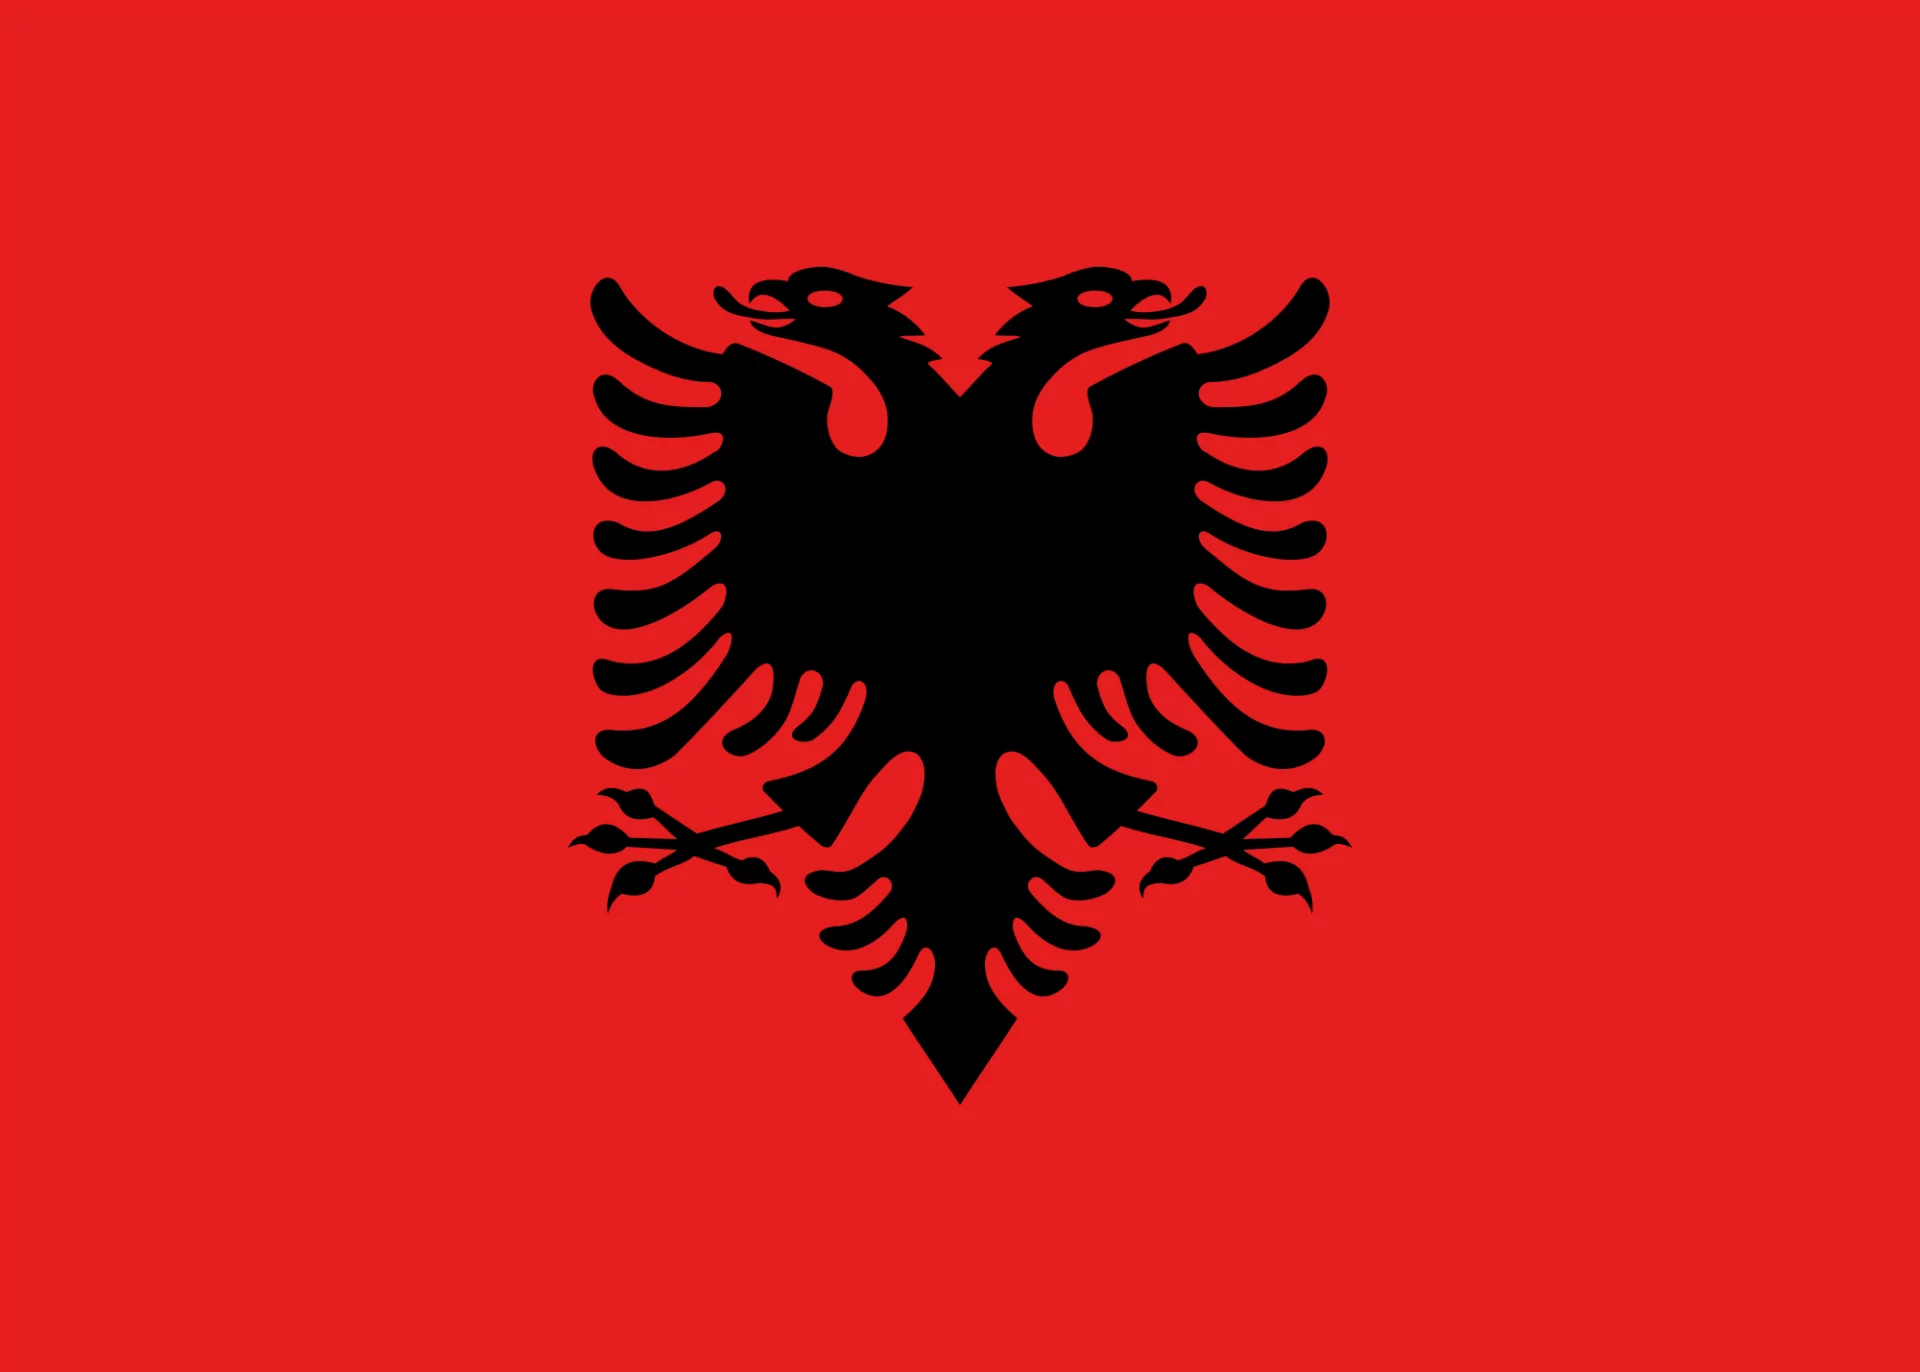 Flag_of_Albania